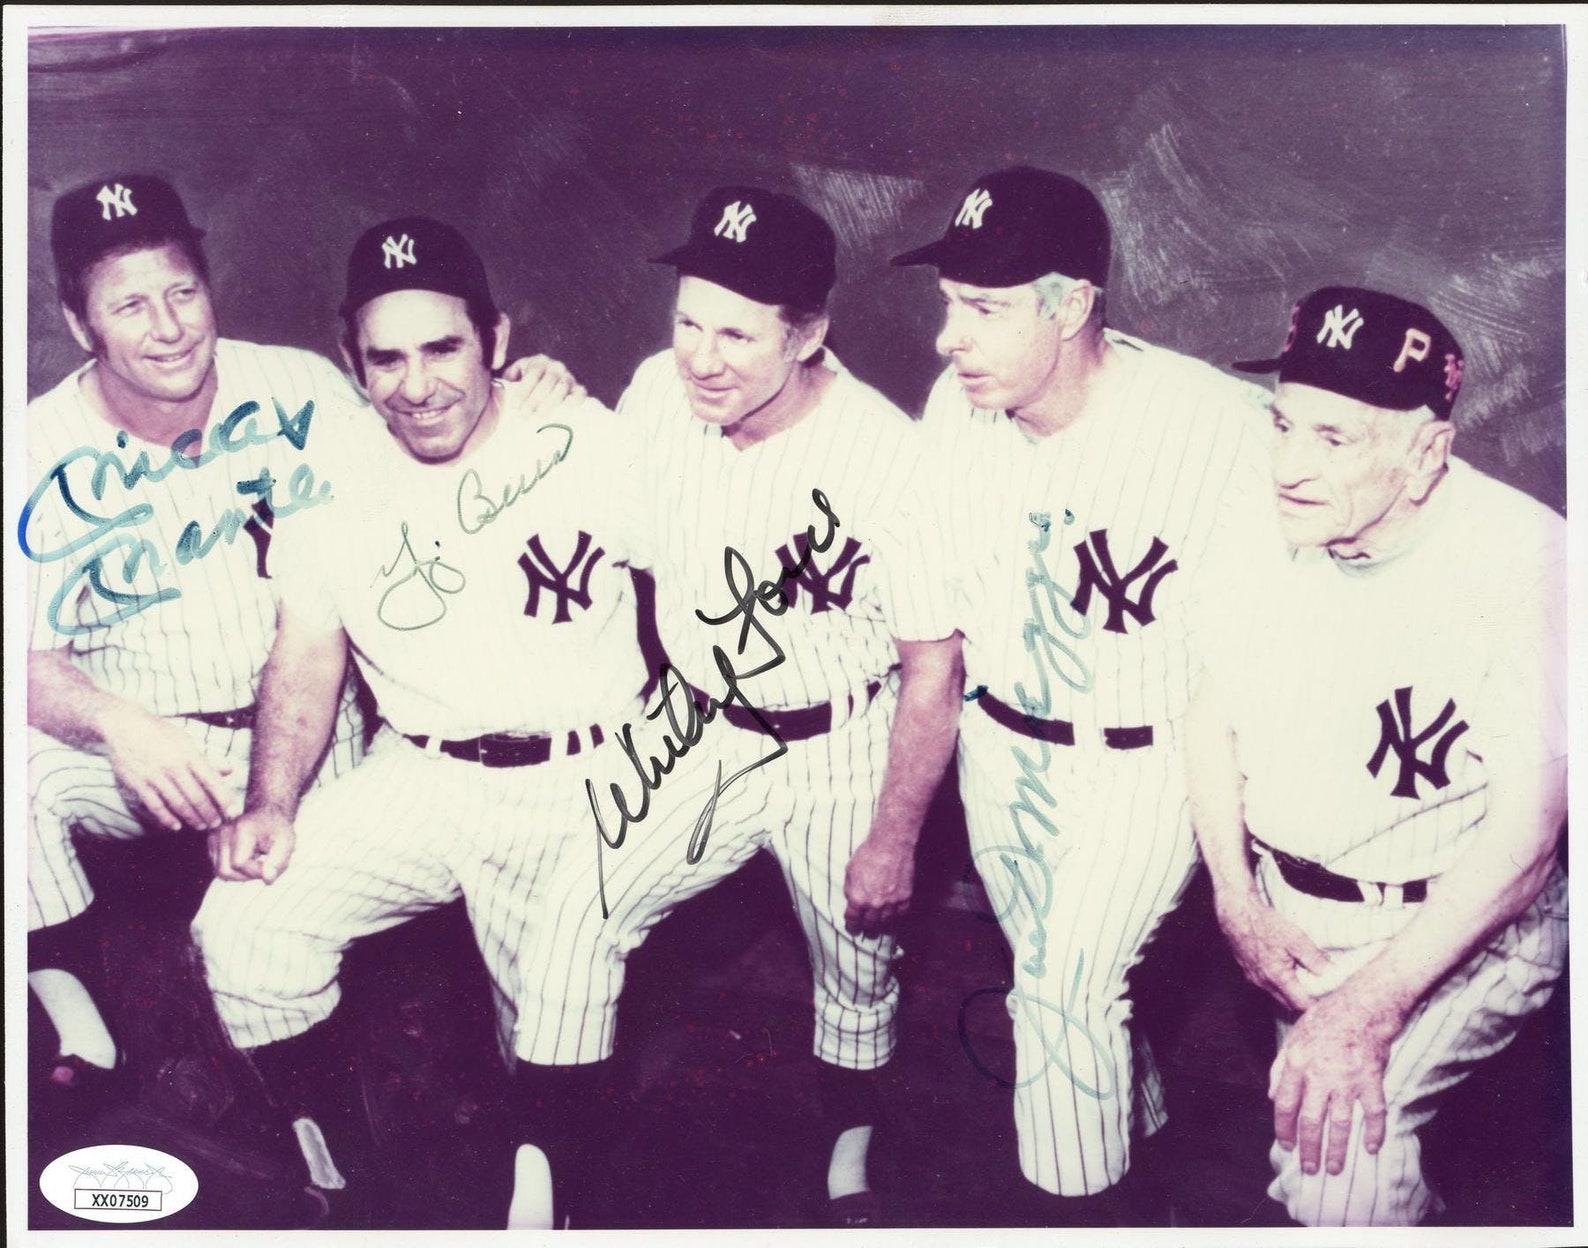 Yogi Berra New York Yankees Baseball MLB Original Autographed